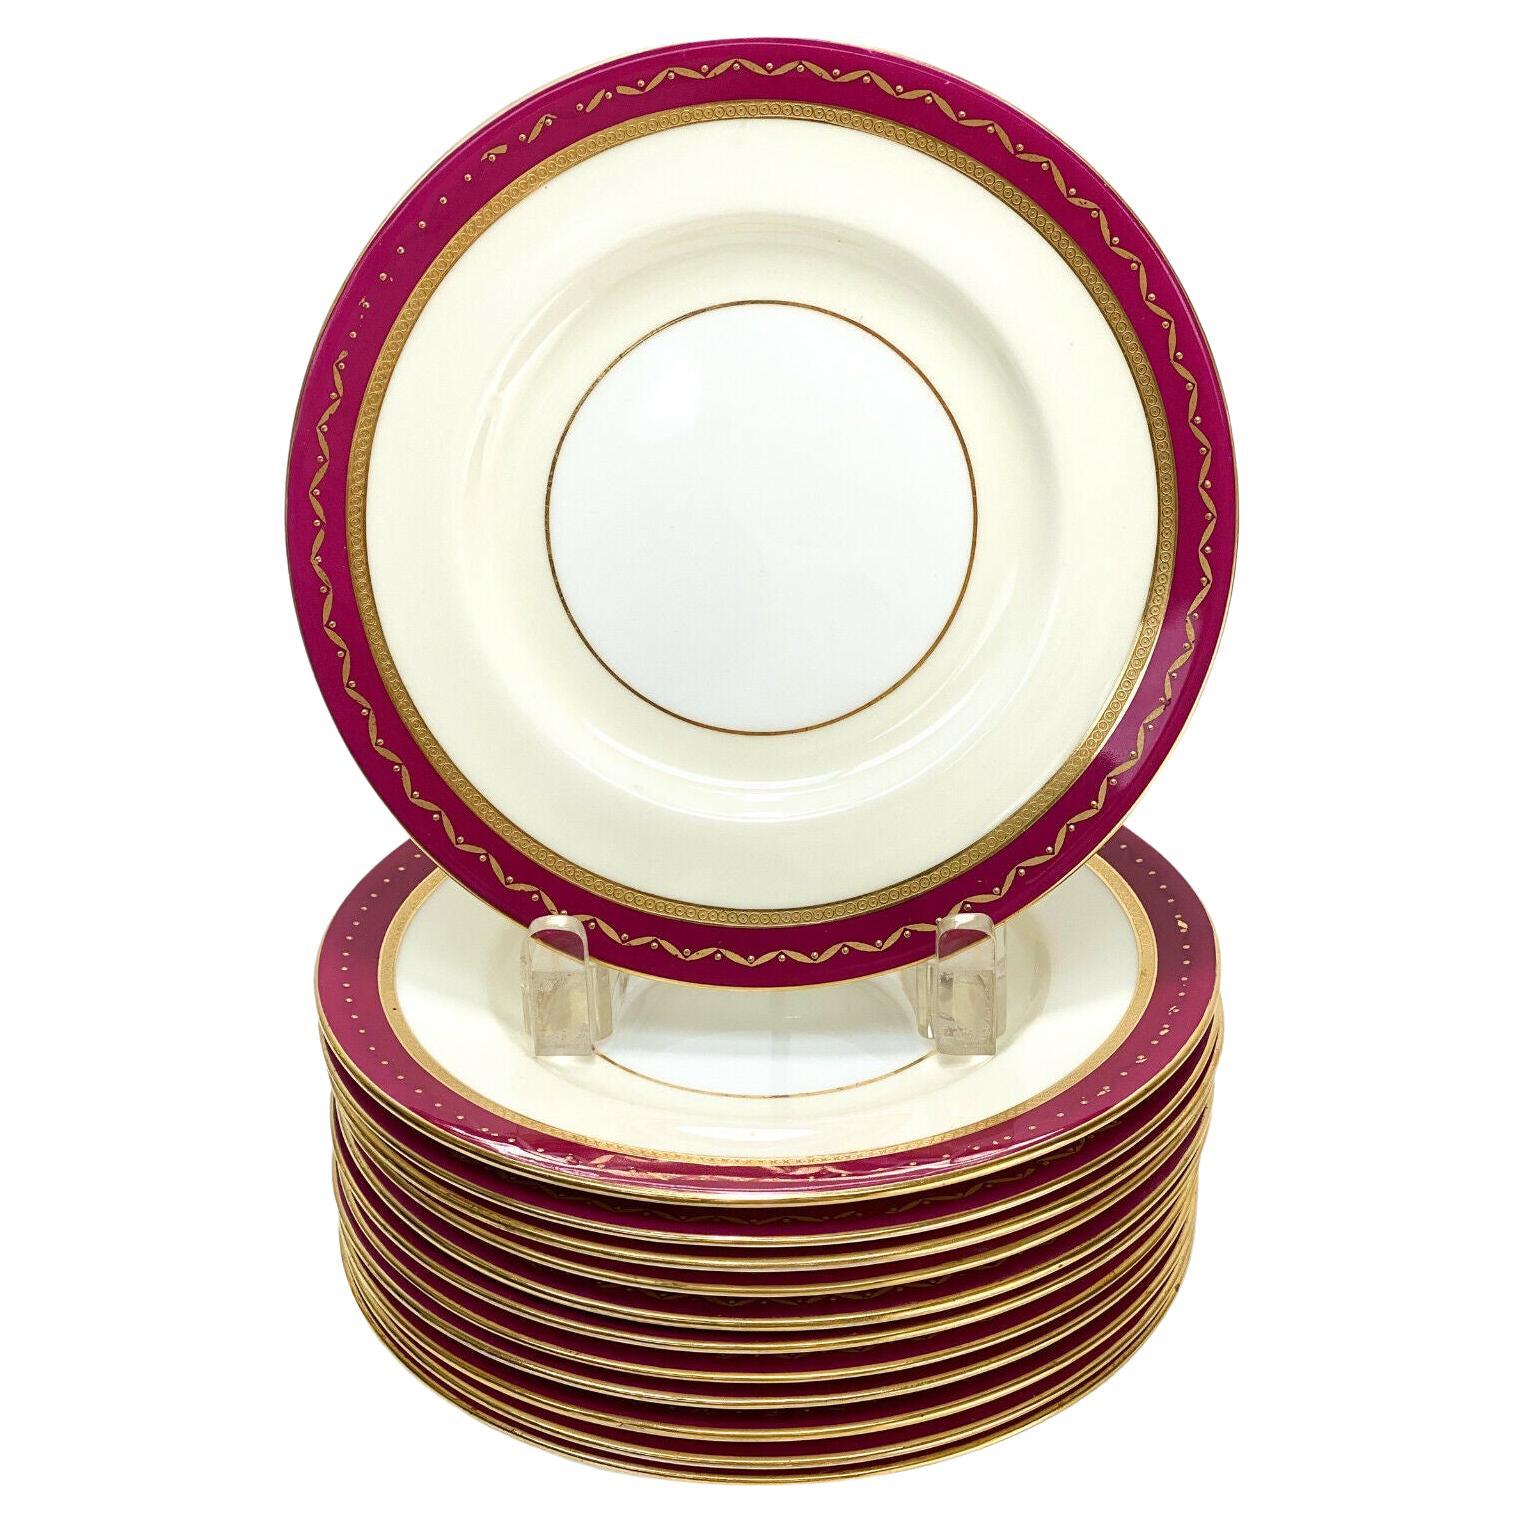 12 Minton England for Tiffany & Co. Porcelain Dessert Plates, C1900